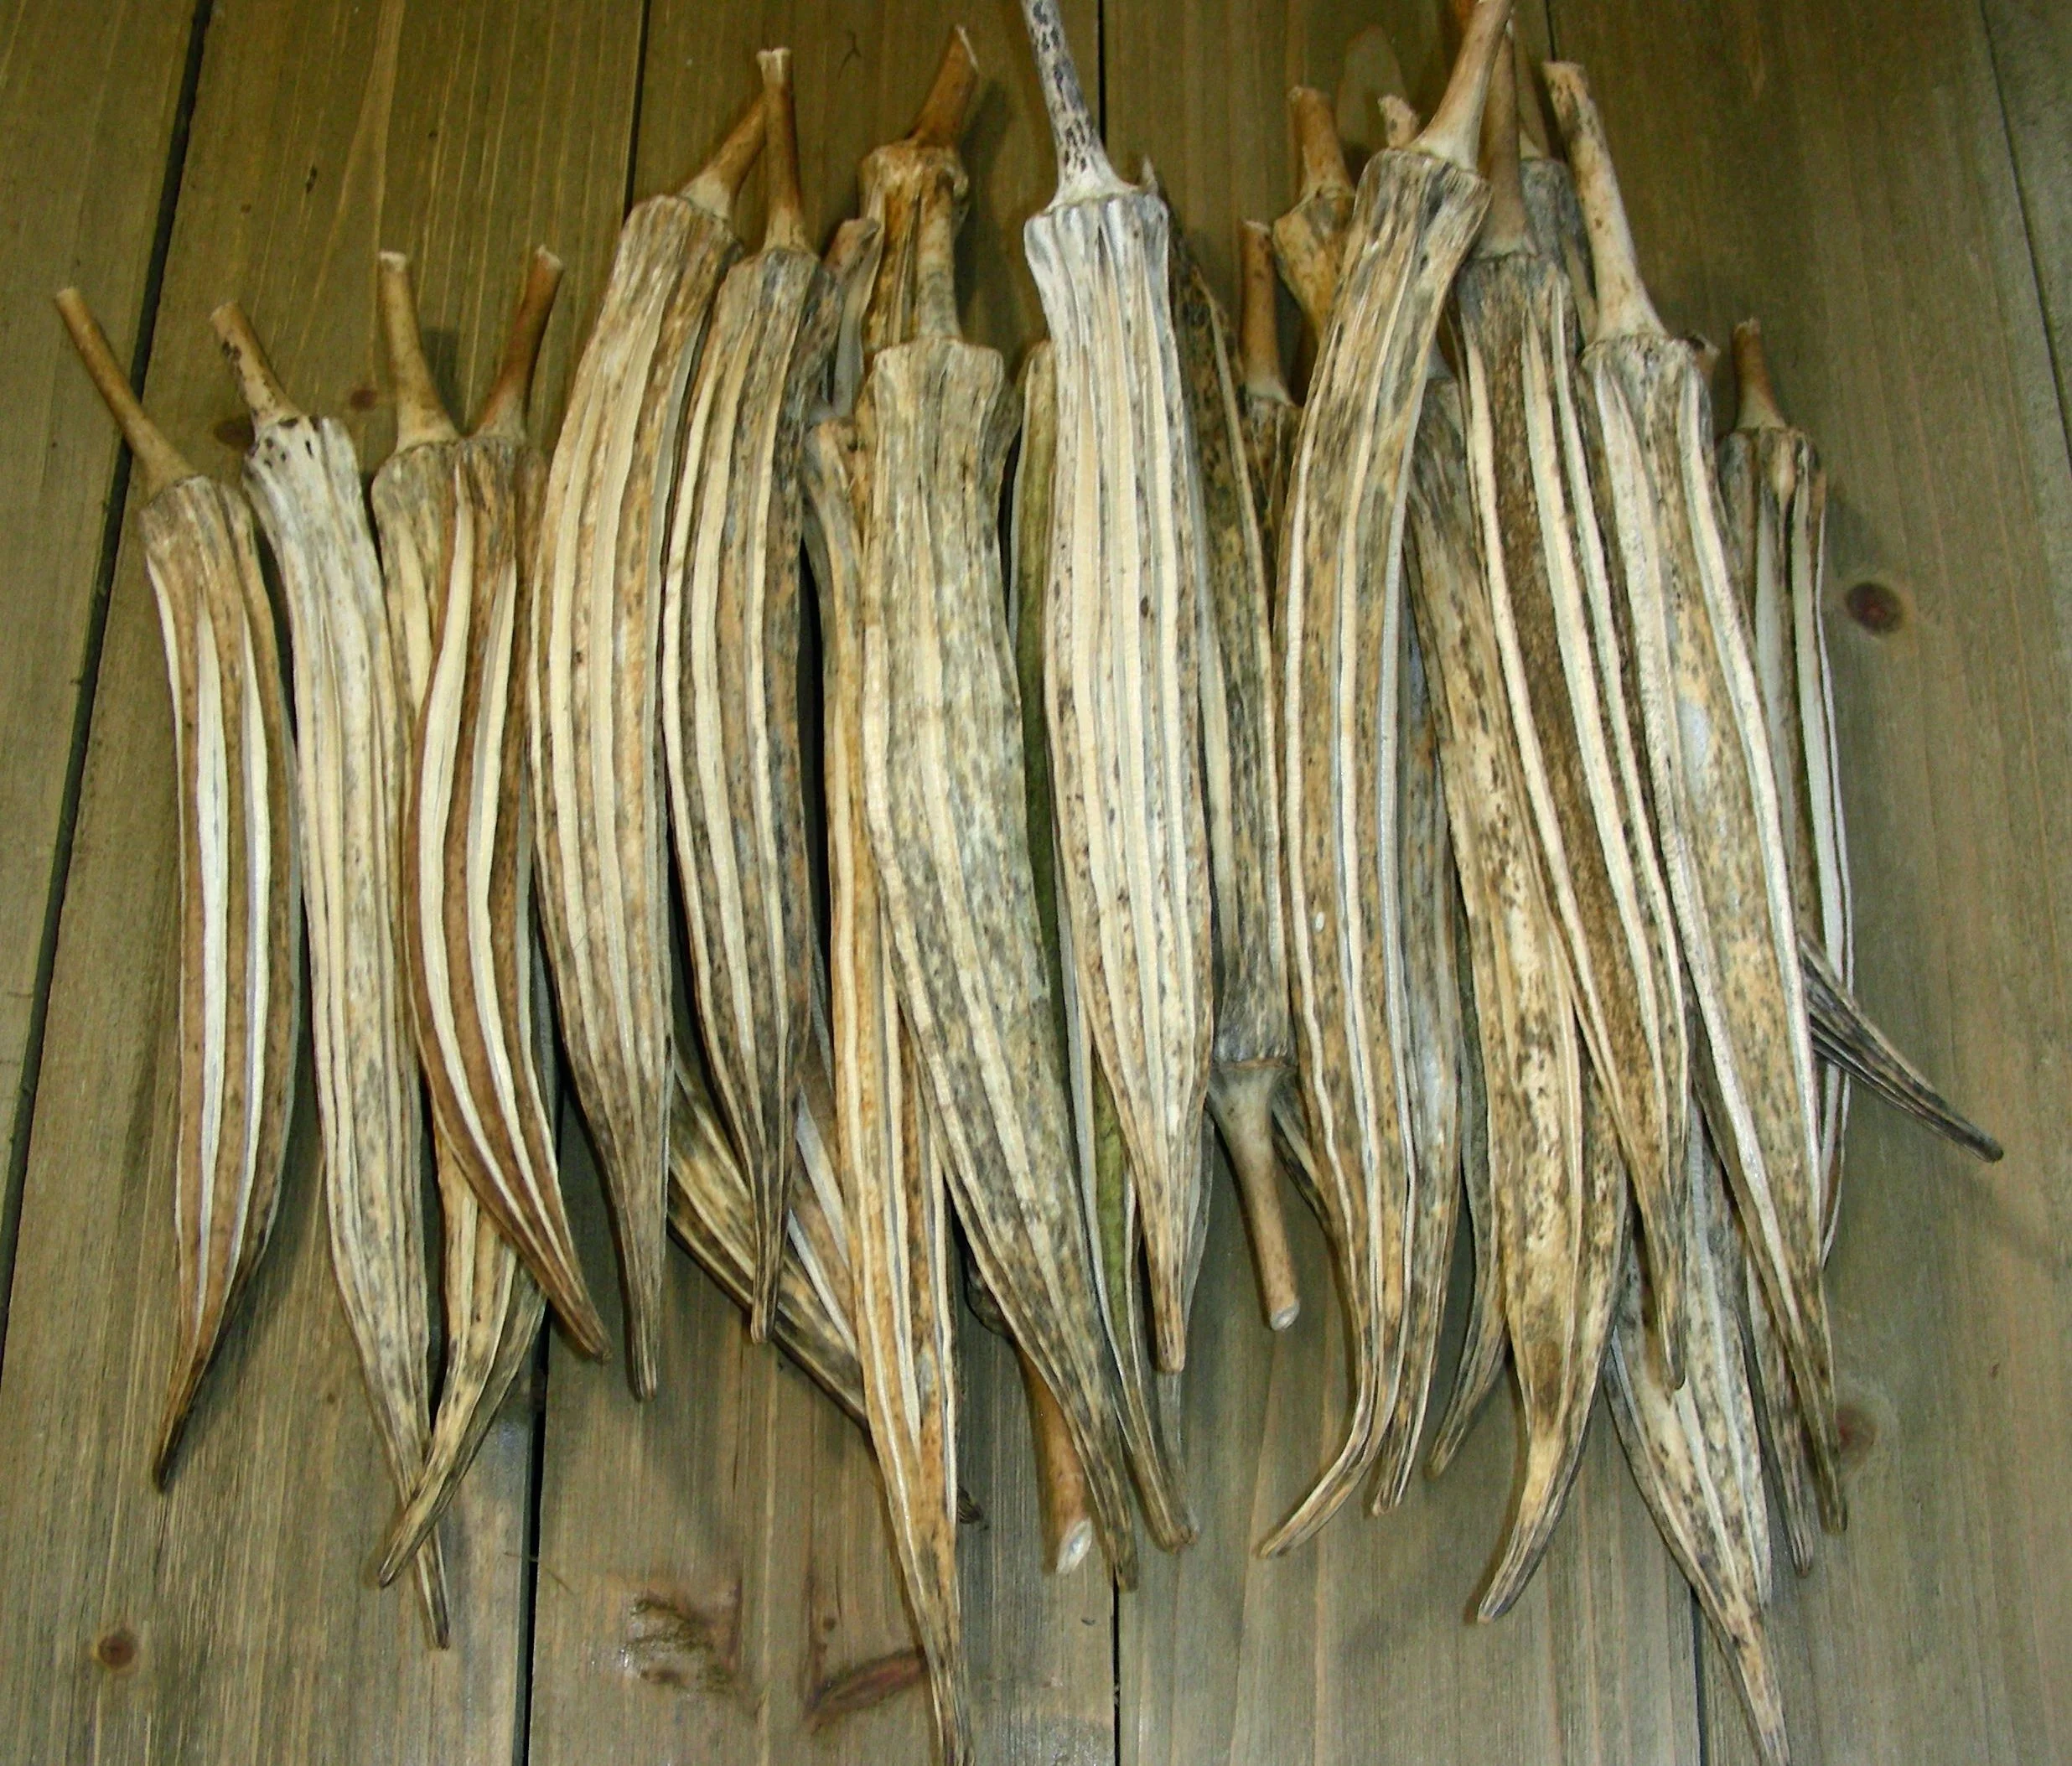 dried okra crafts